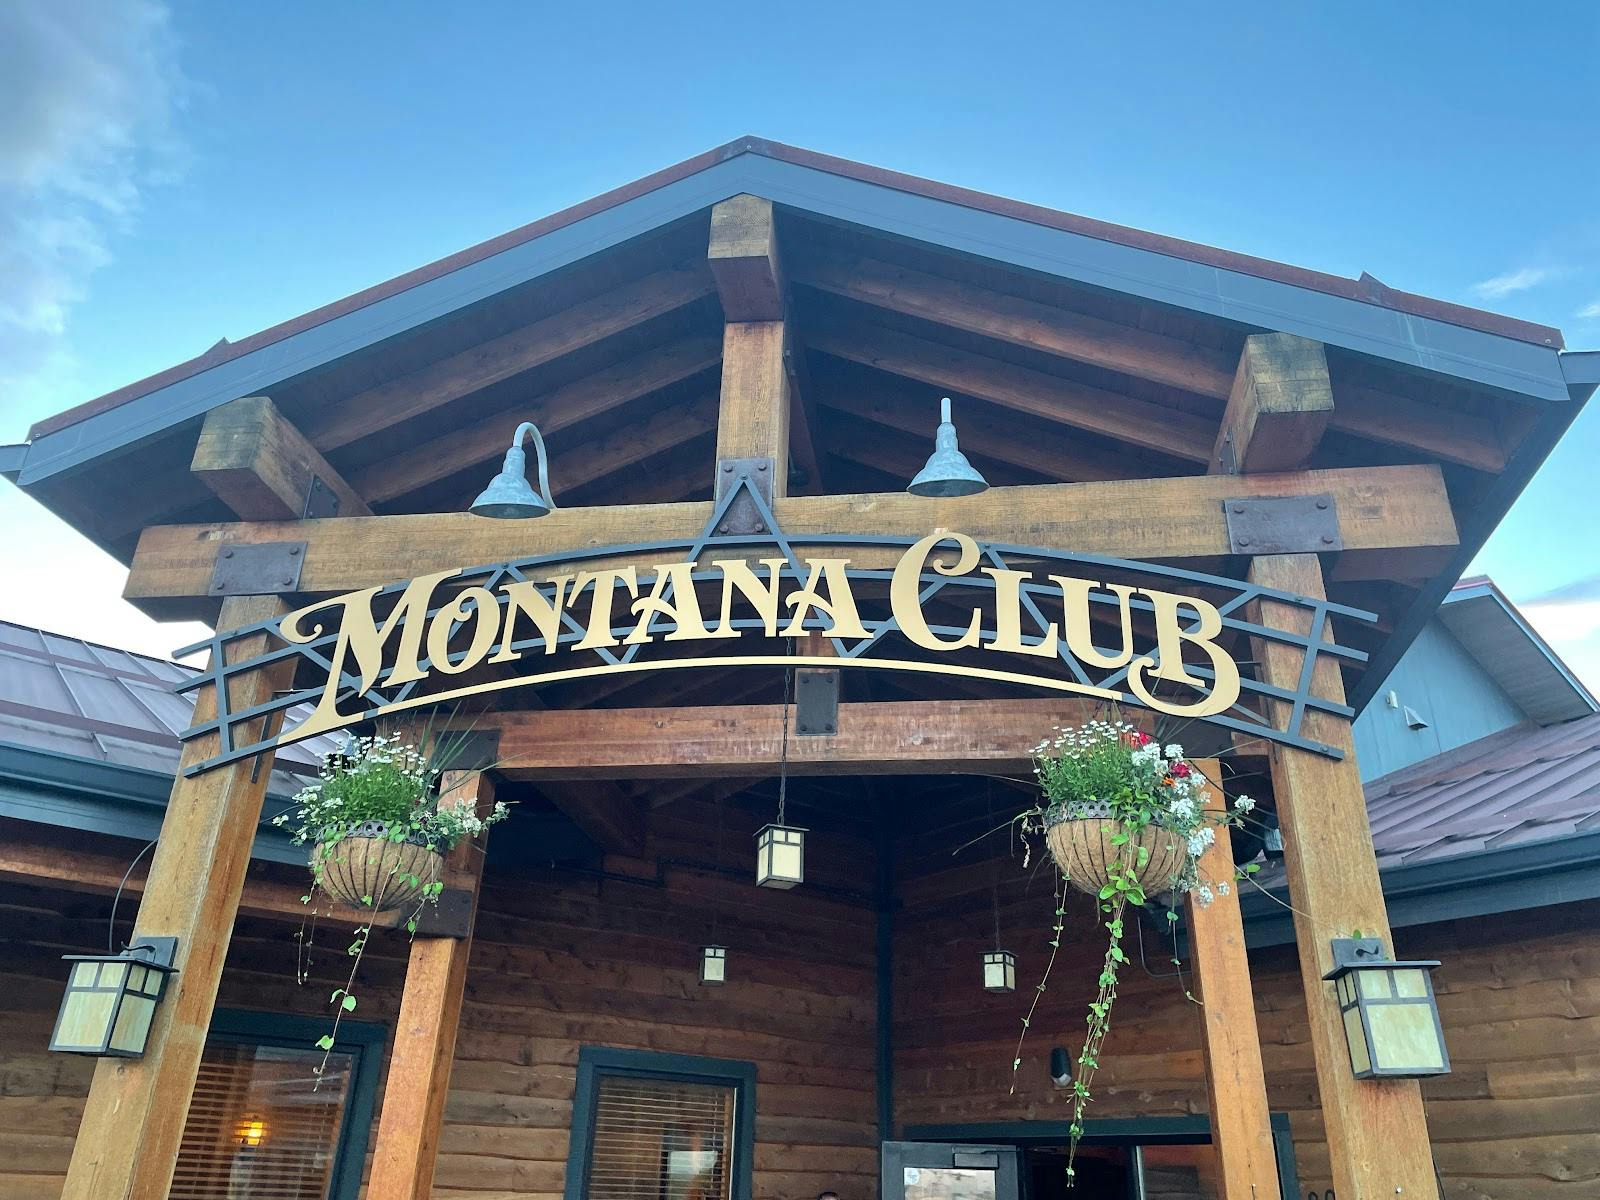 Image - The Montana Club Restaurant